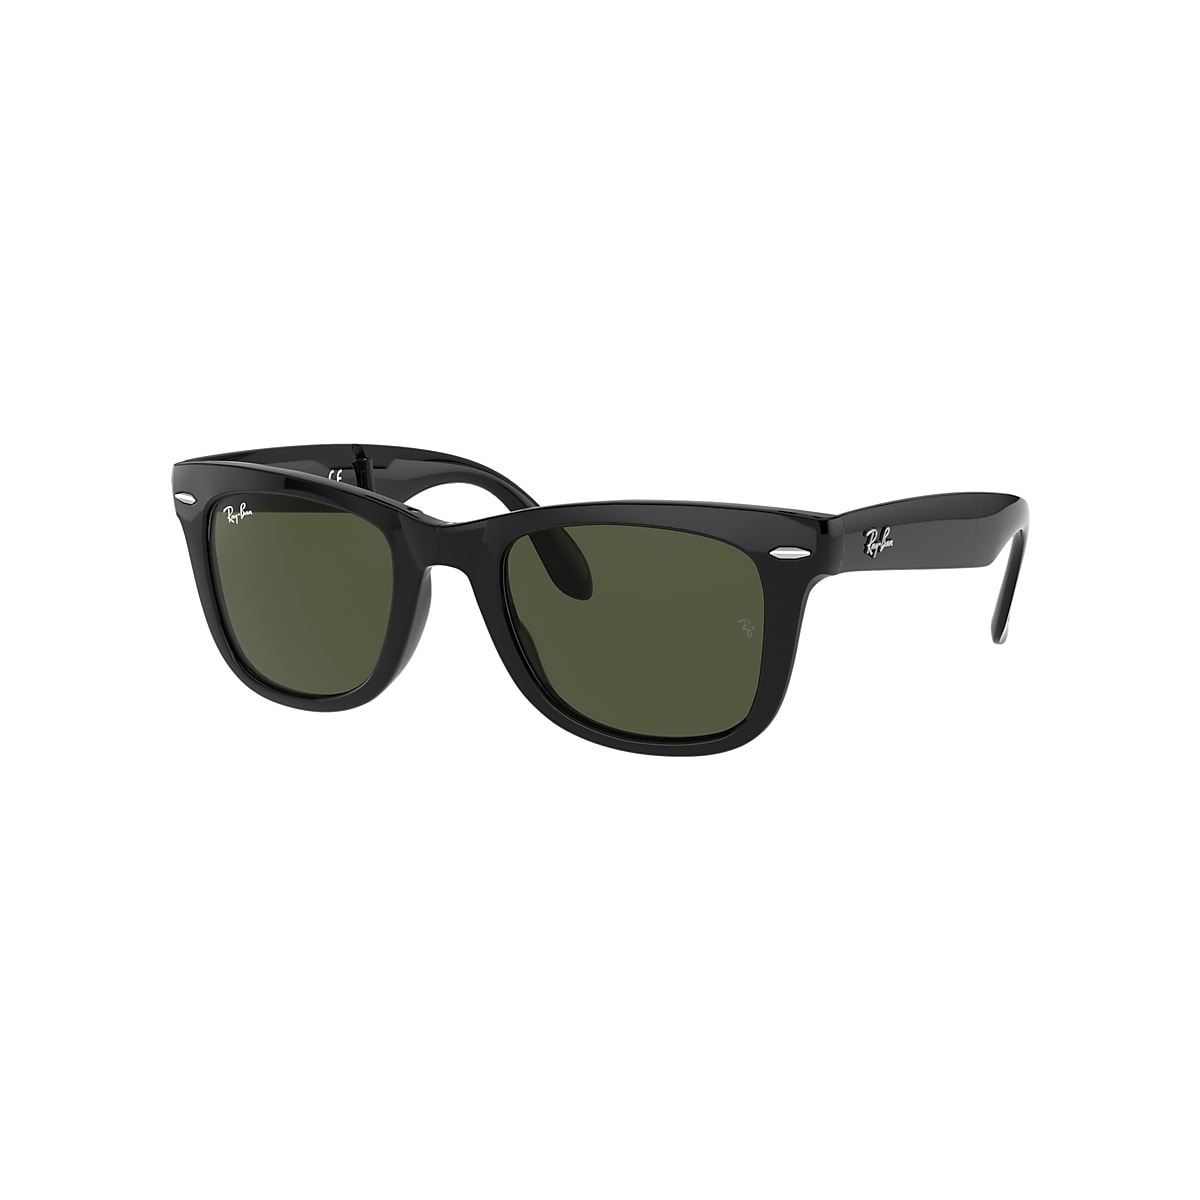 illoyalitet Afslag Huddle WAYFARER FOLDING CLASSIC Sunglasses in Black and Green - RB4105 | Ray-Ban®  US